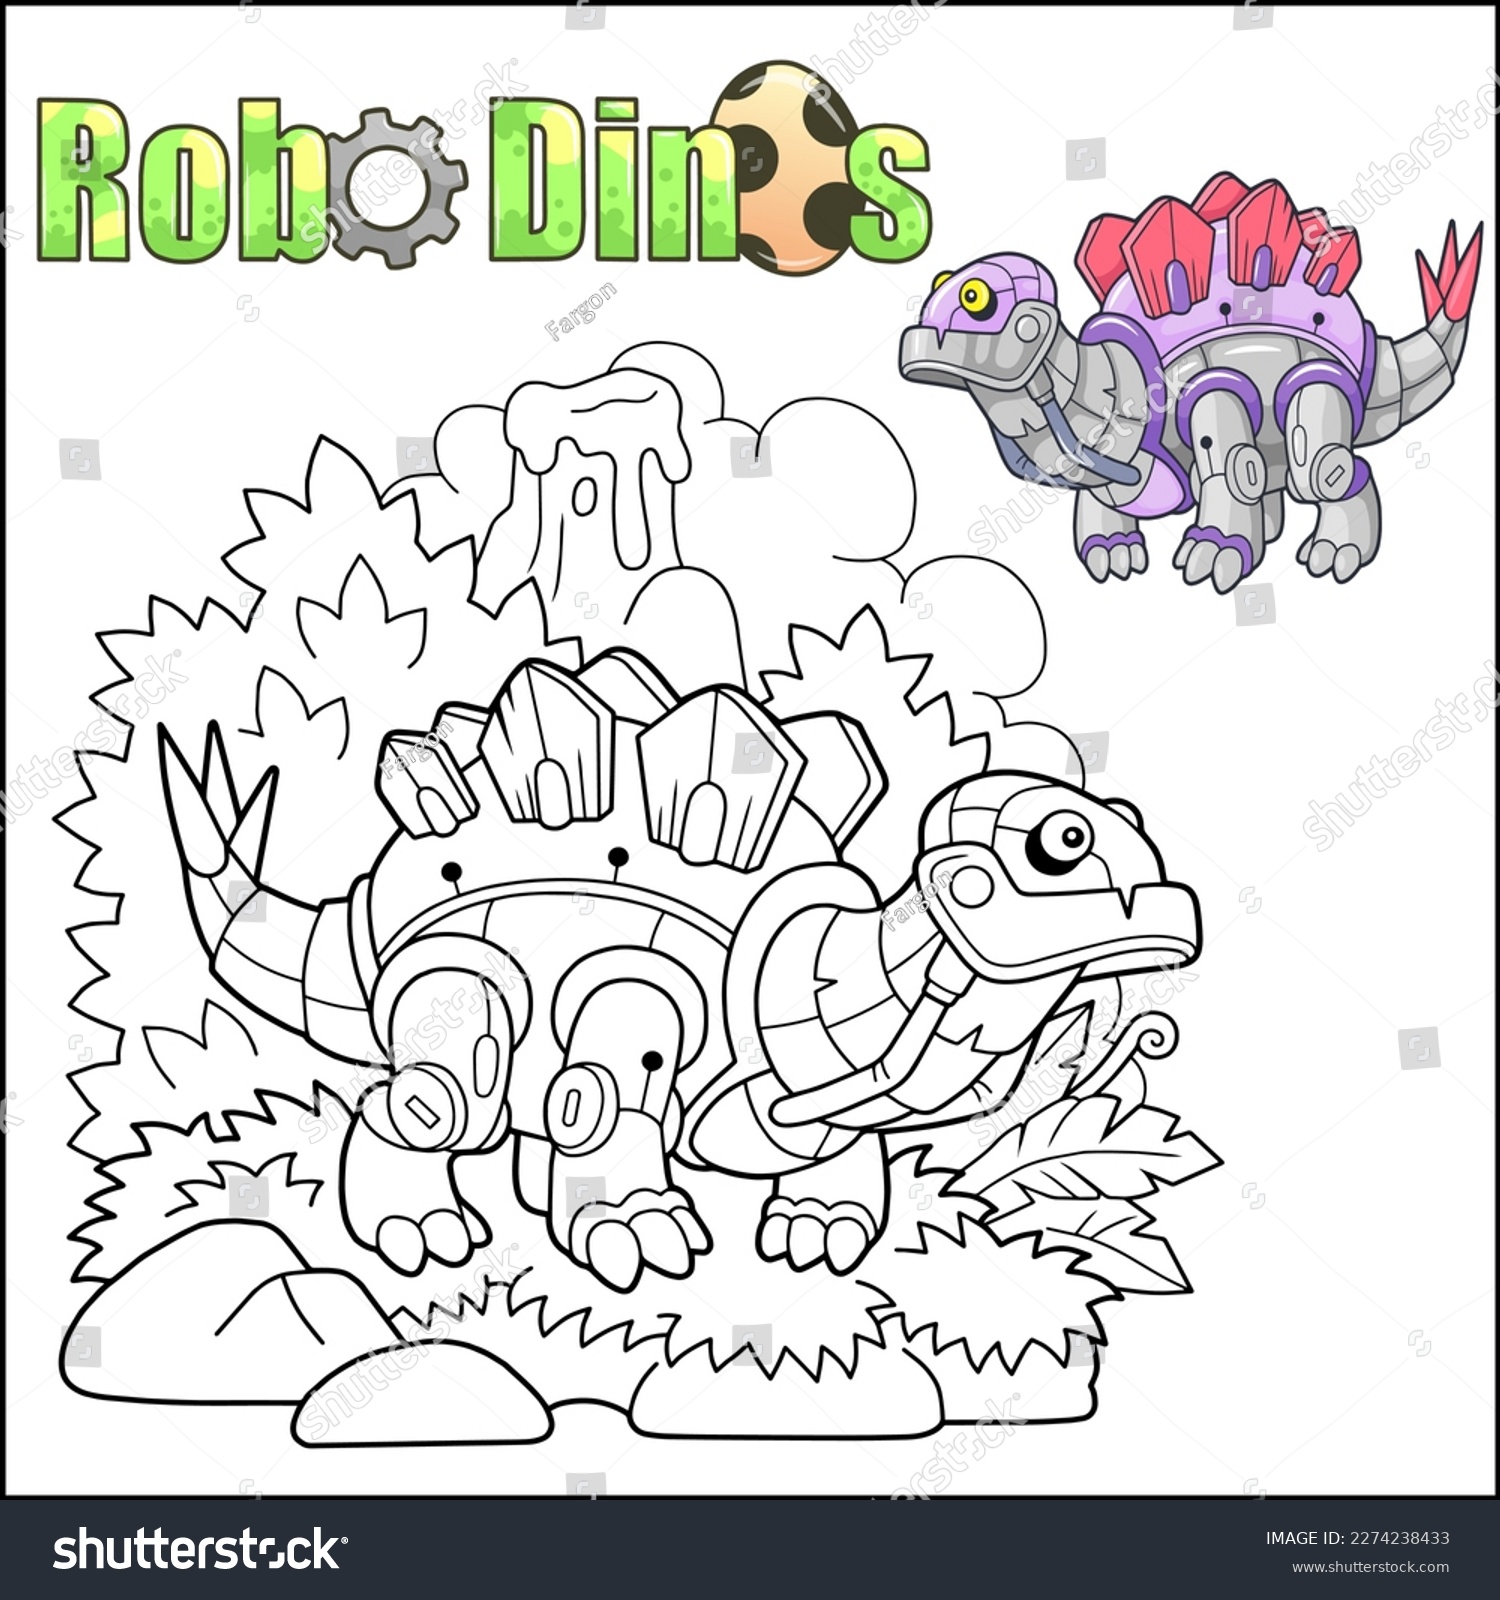 Cartoon robot dinosaur coloring book stock vector royalty free